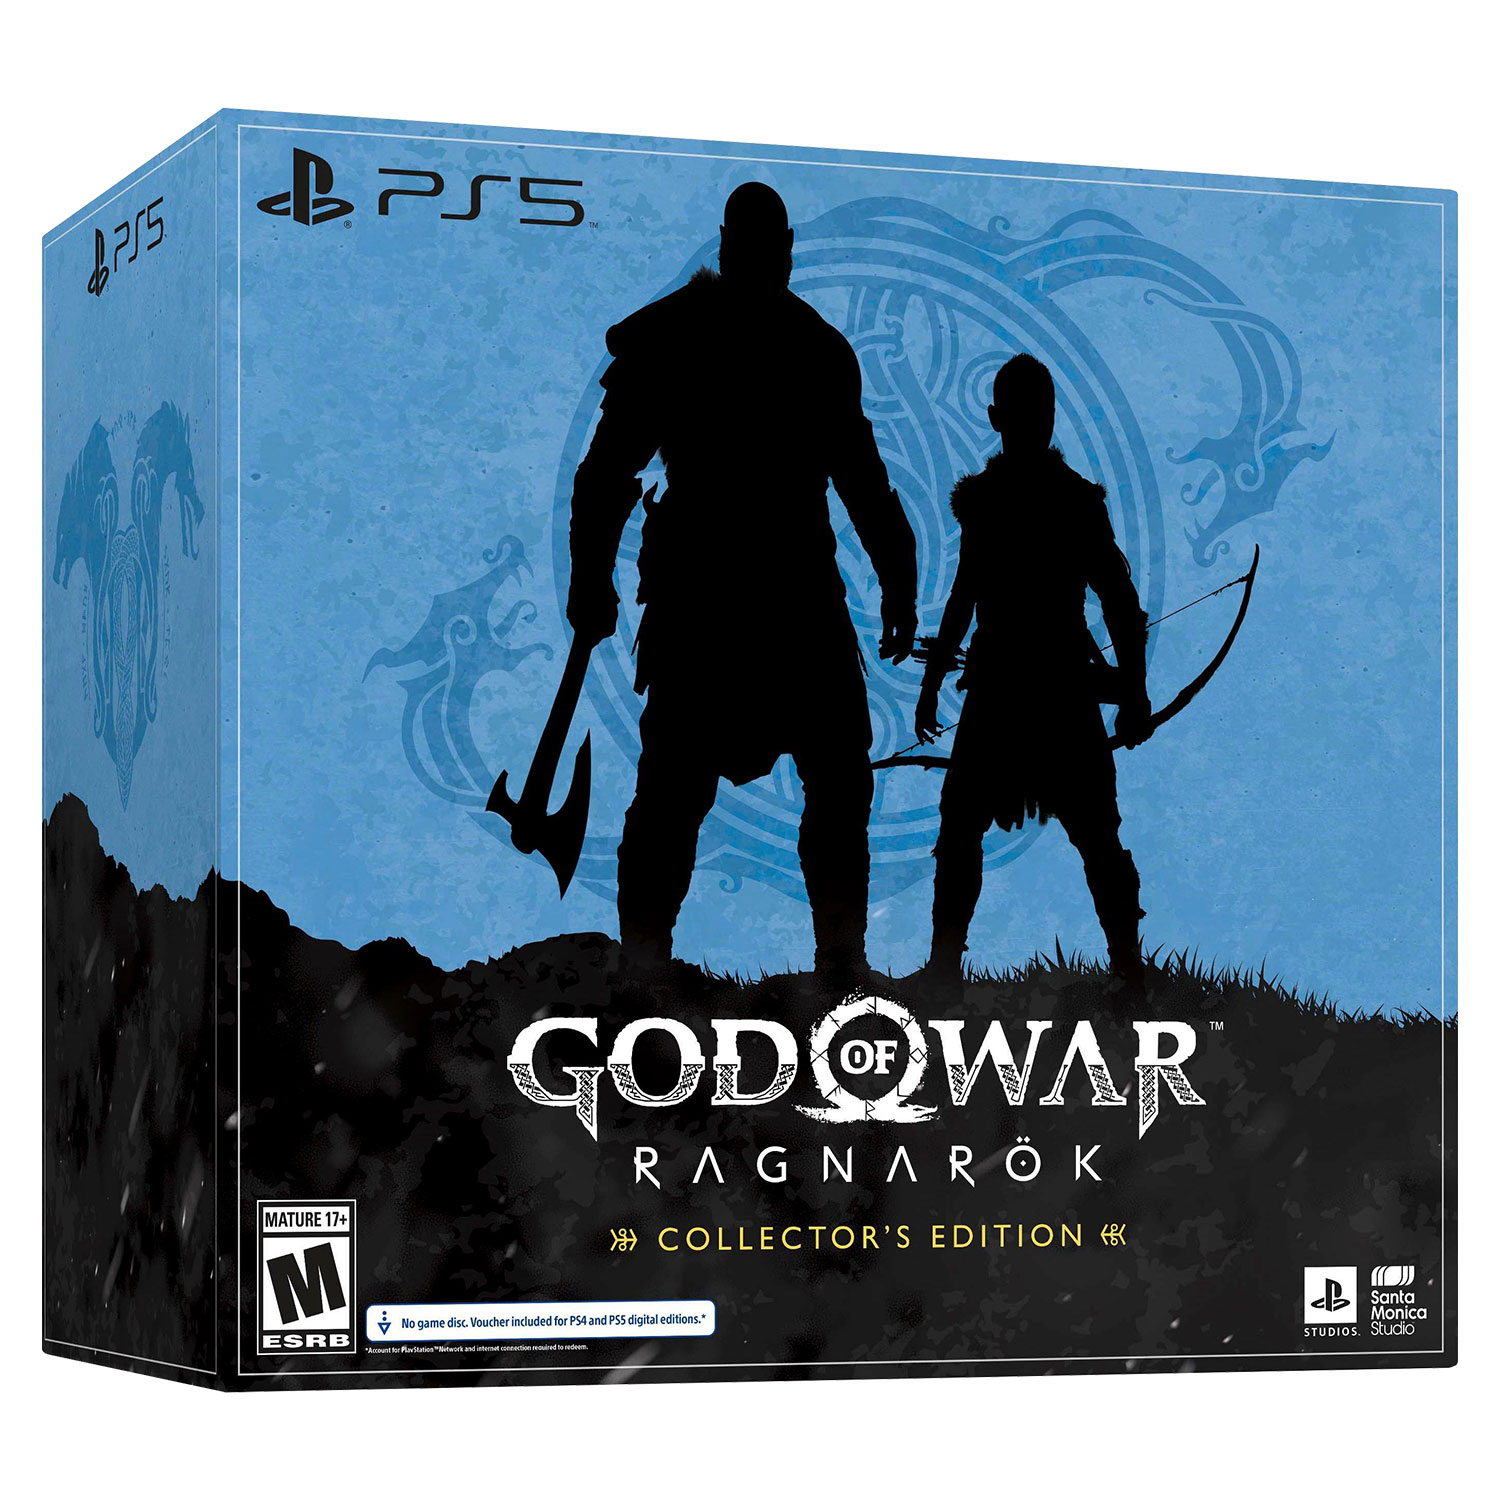 Game God of War Ragnarok Playstation 4 no Paraguai 